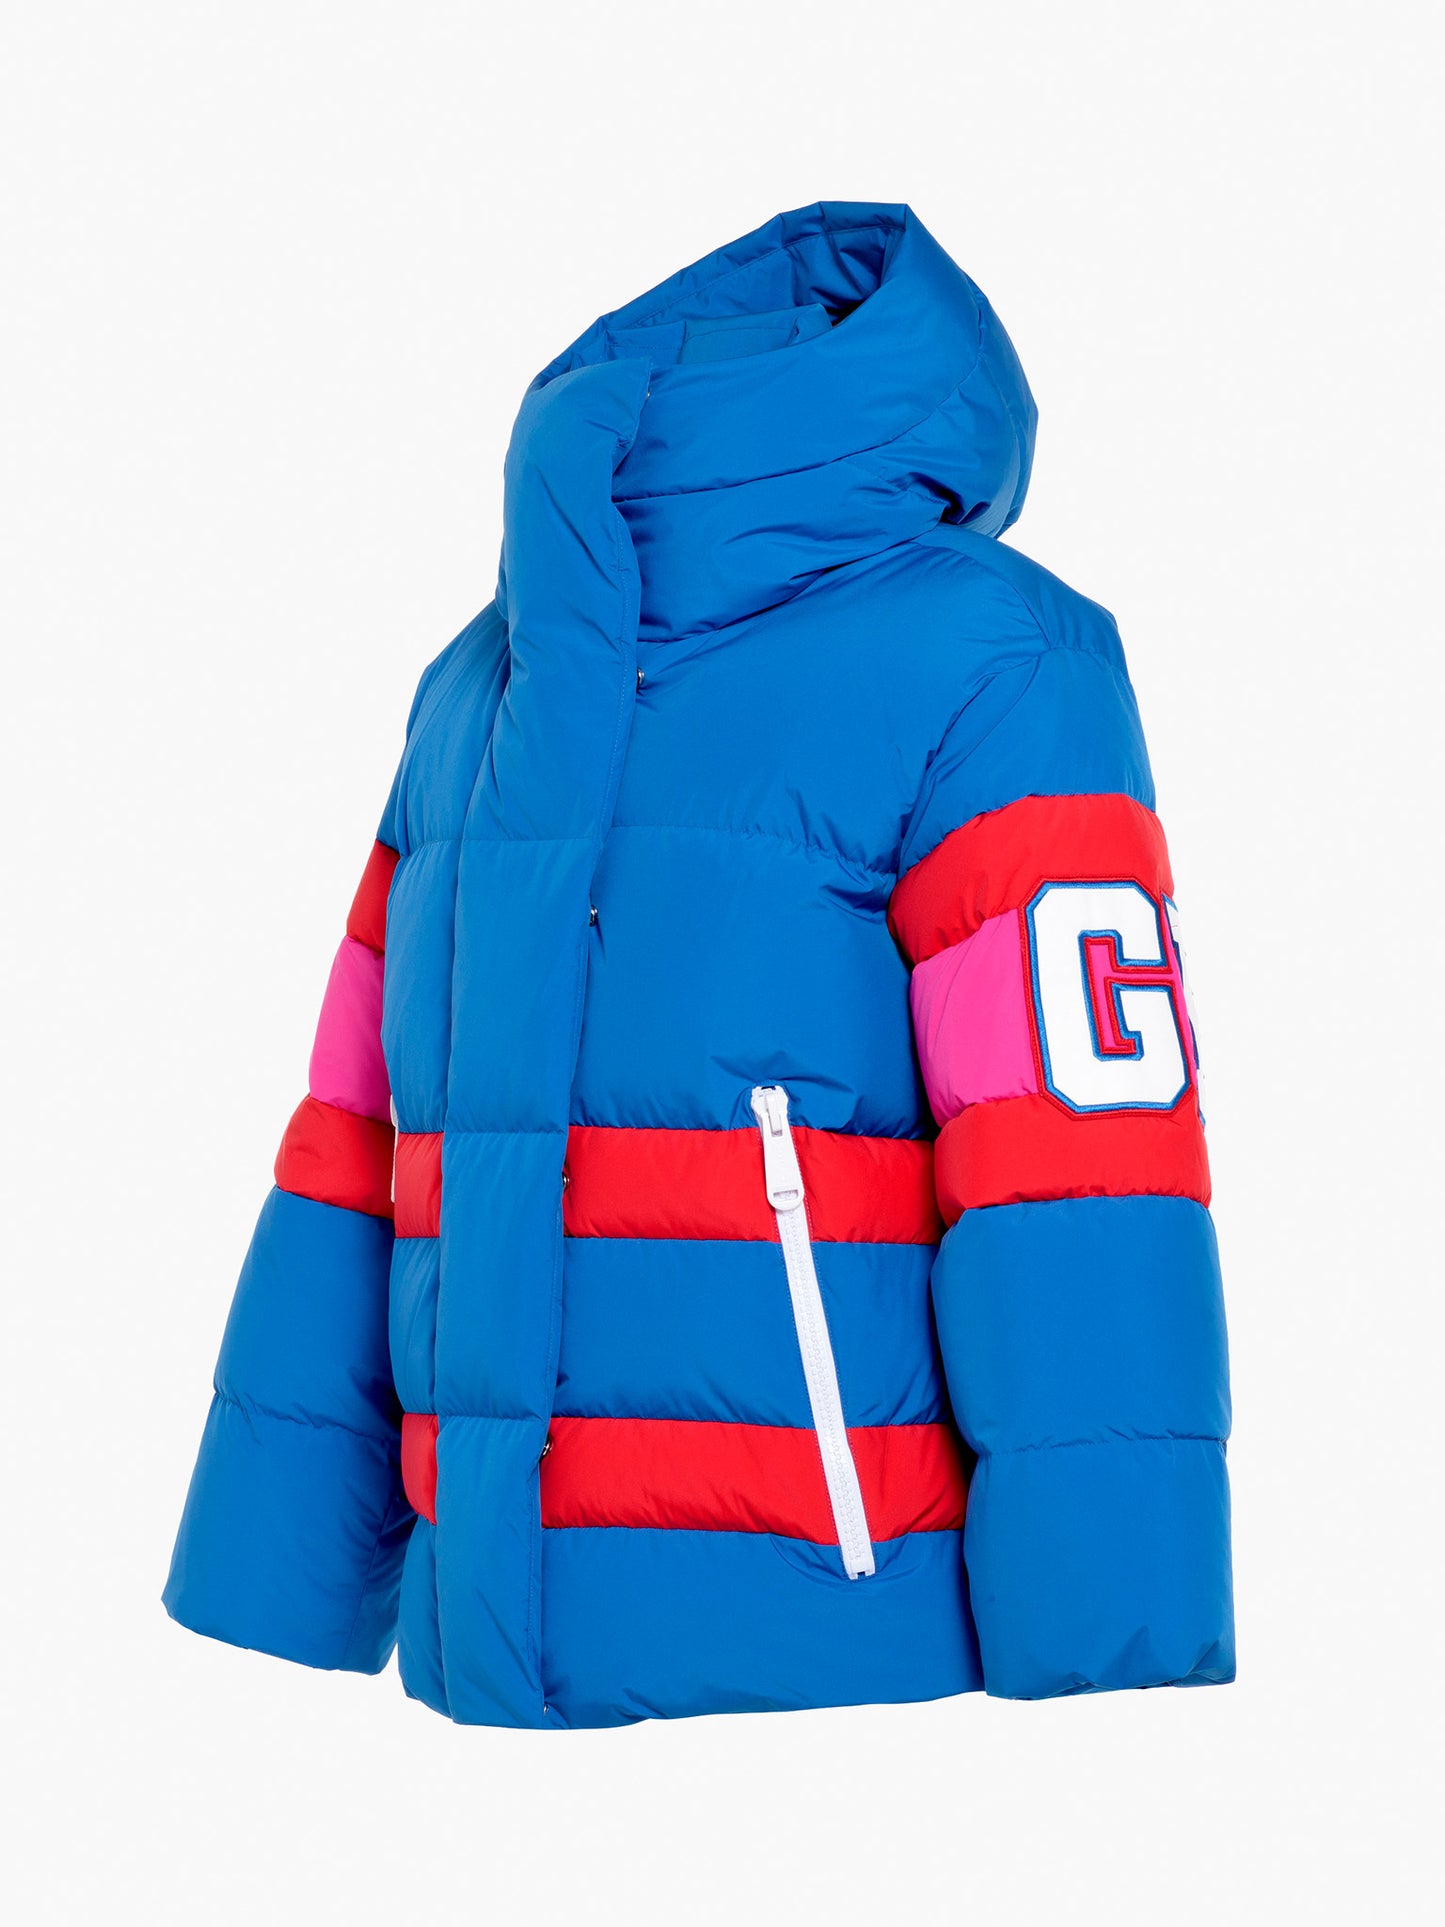 LEAGUE ski jacket